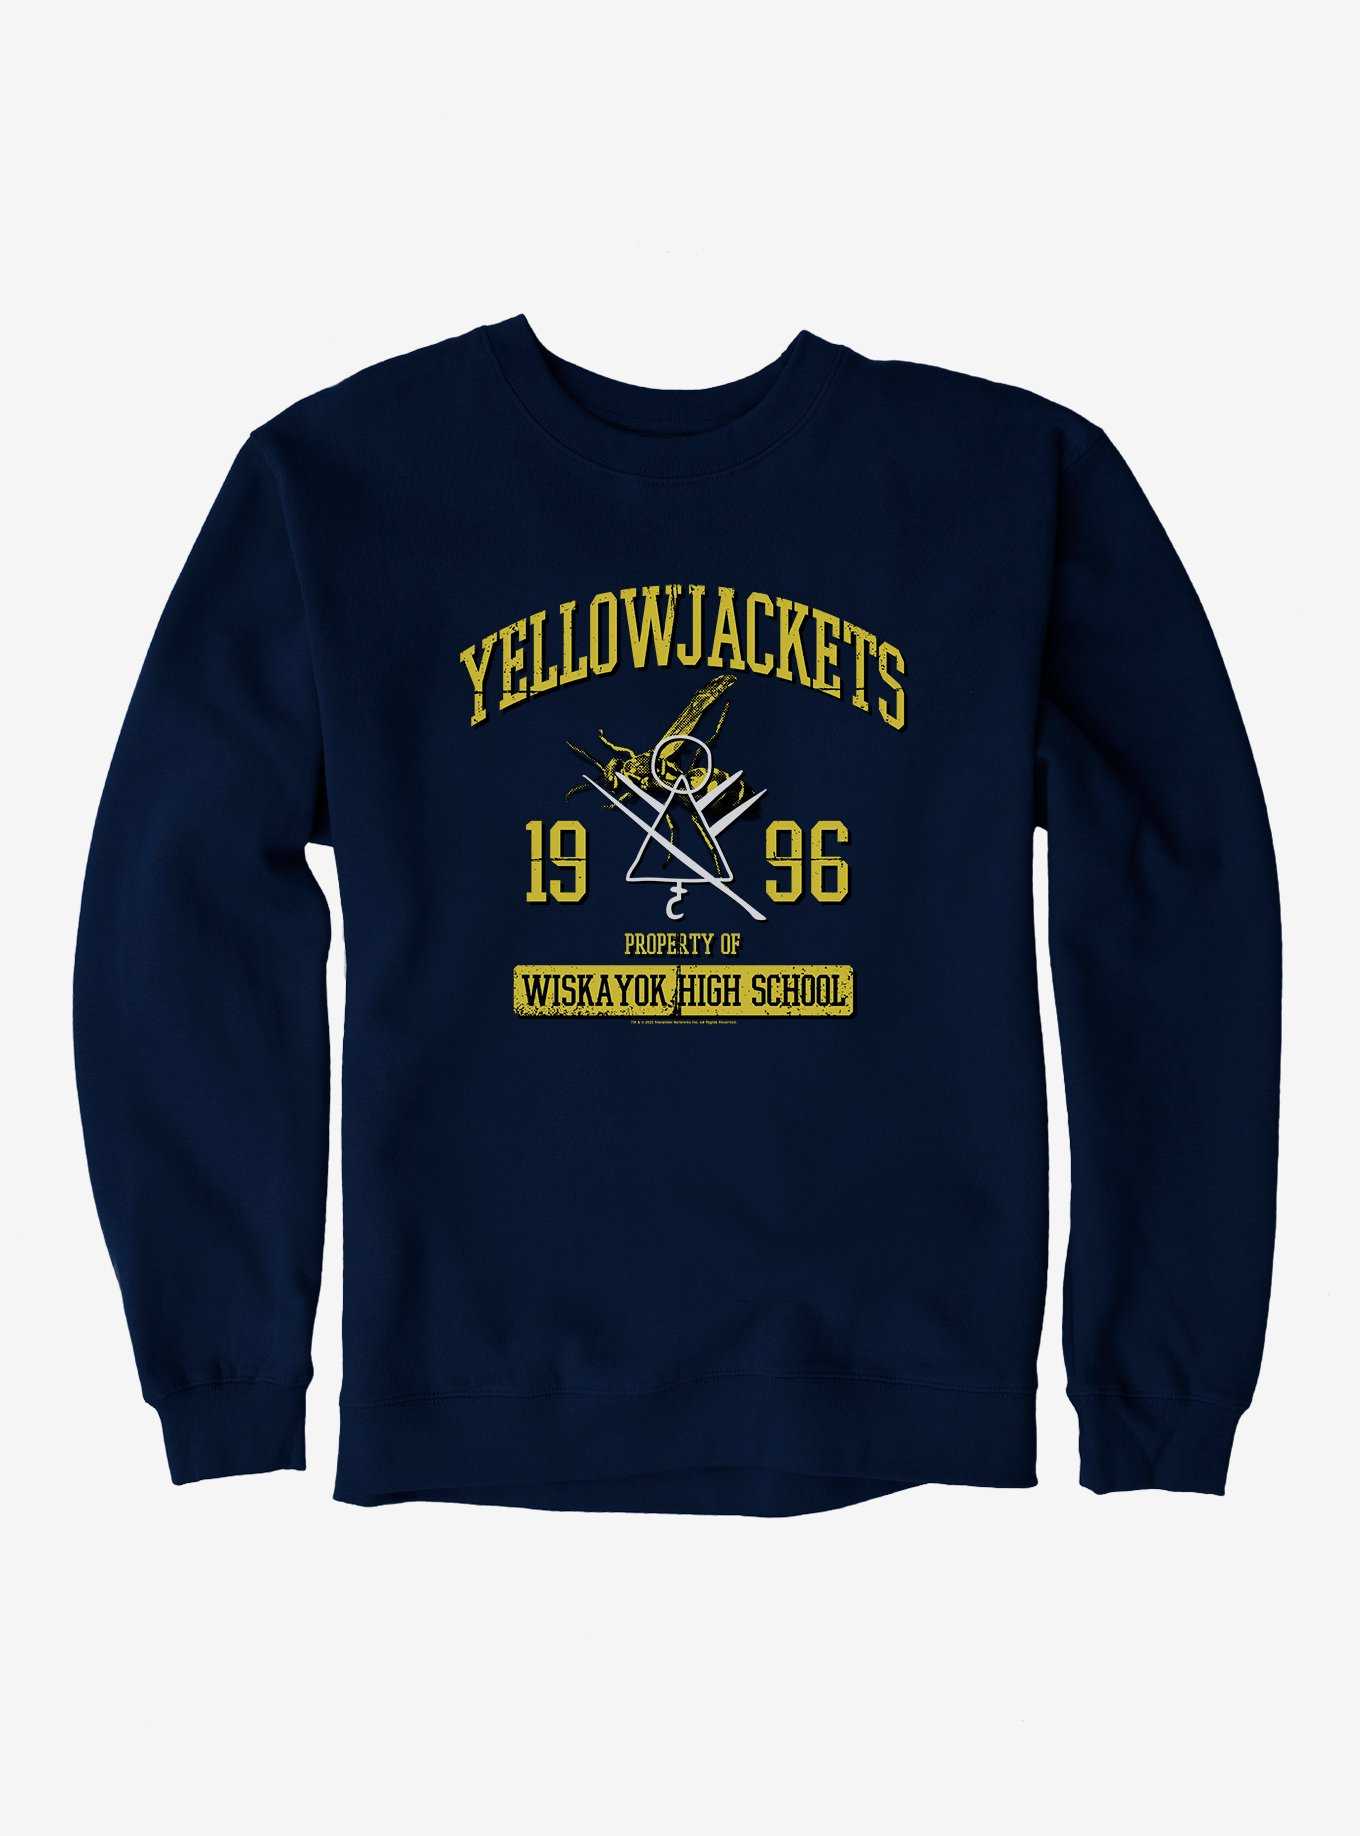 Yellowjackets Property Of Wiskayok High School Sweatshirt, , hi-res